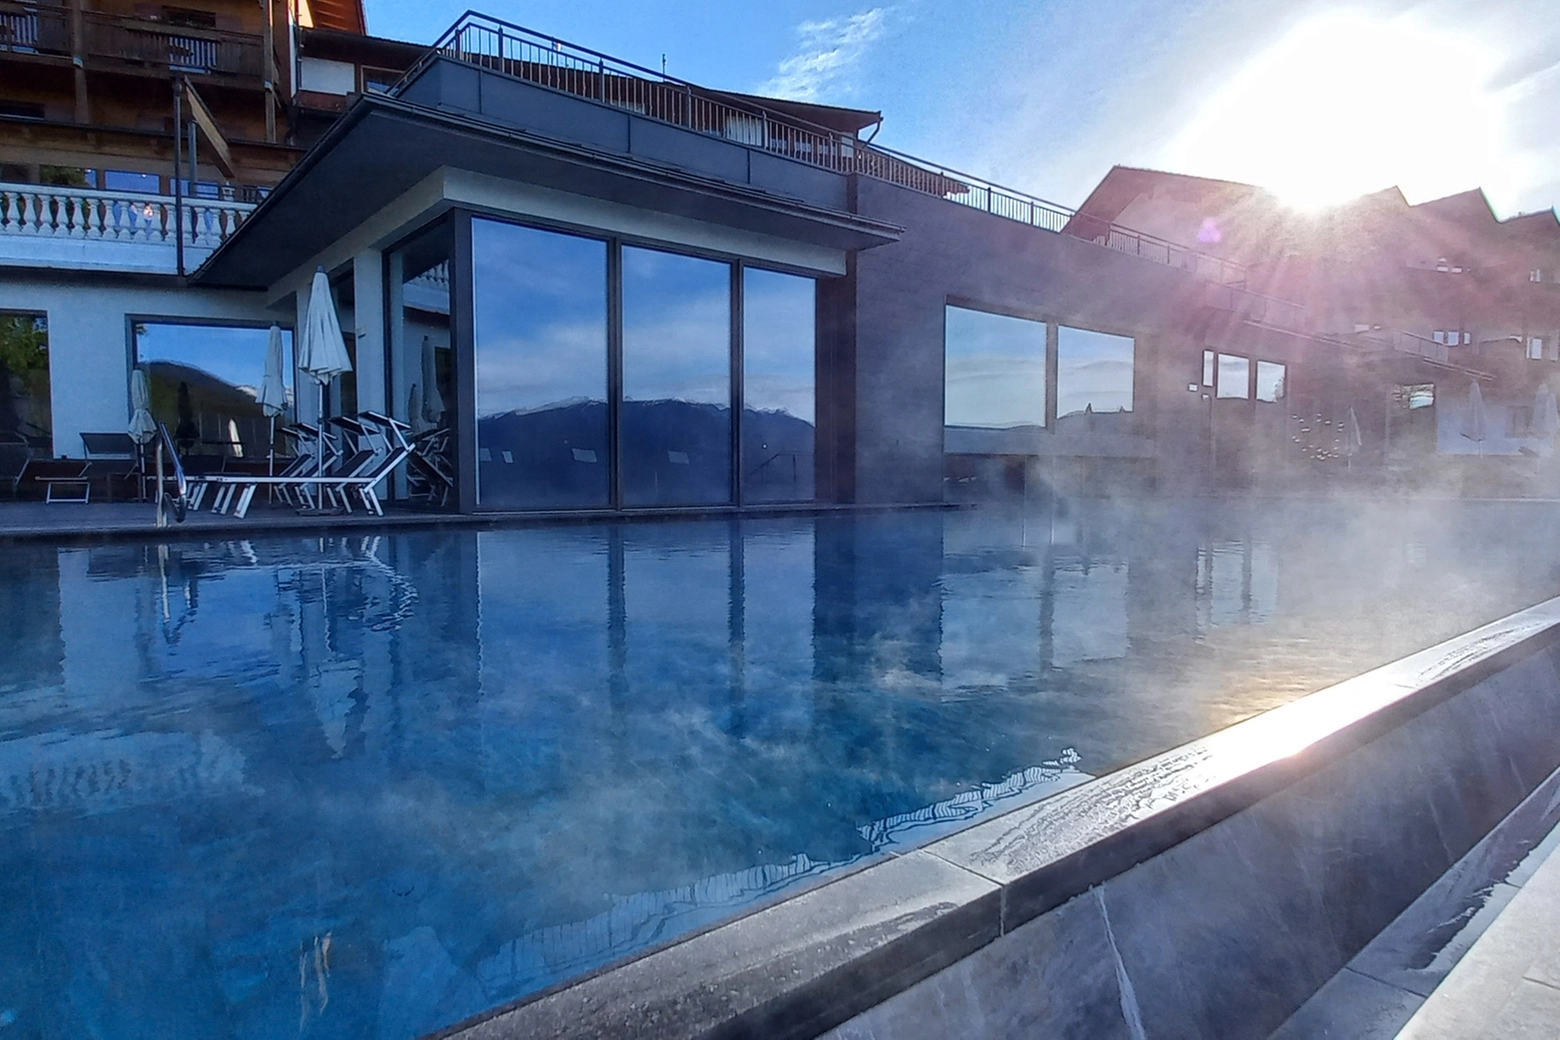 La piscina riscaldata allo spuntar del sole (Hotel Holzerhof)